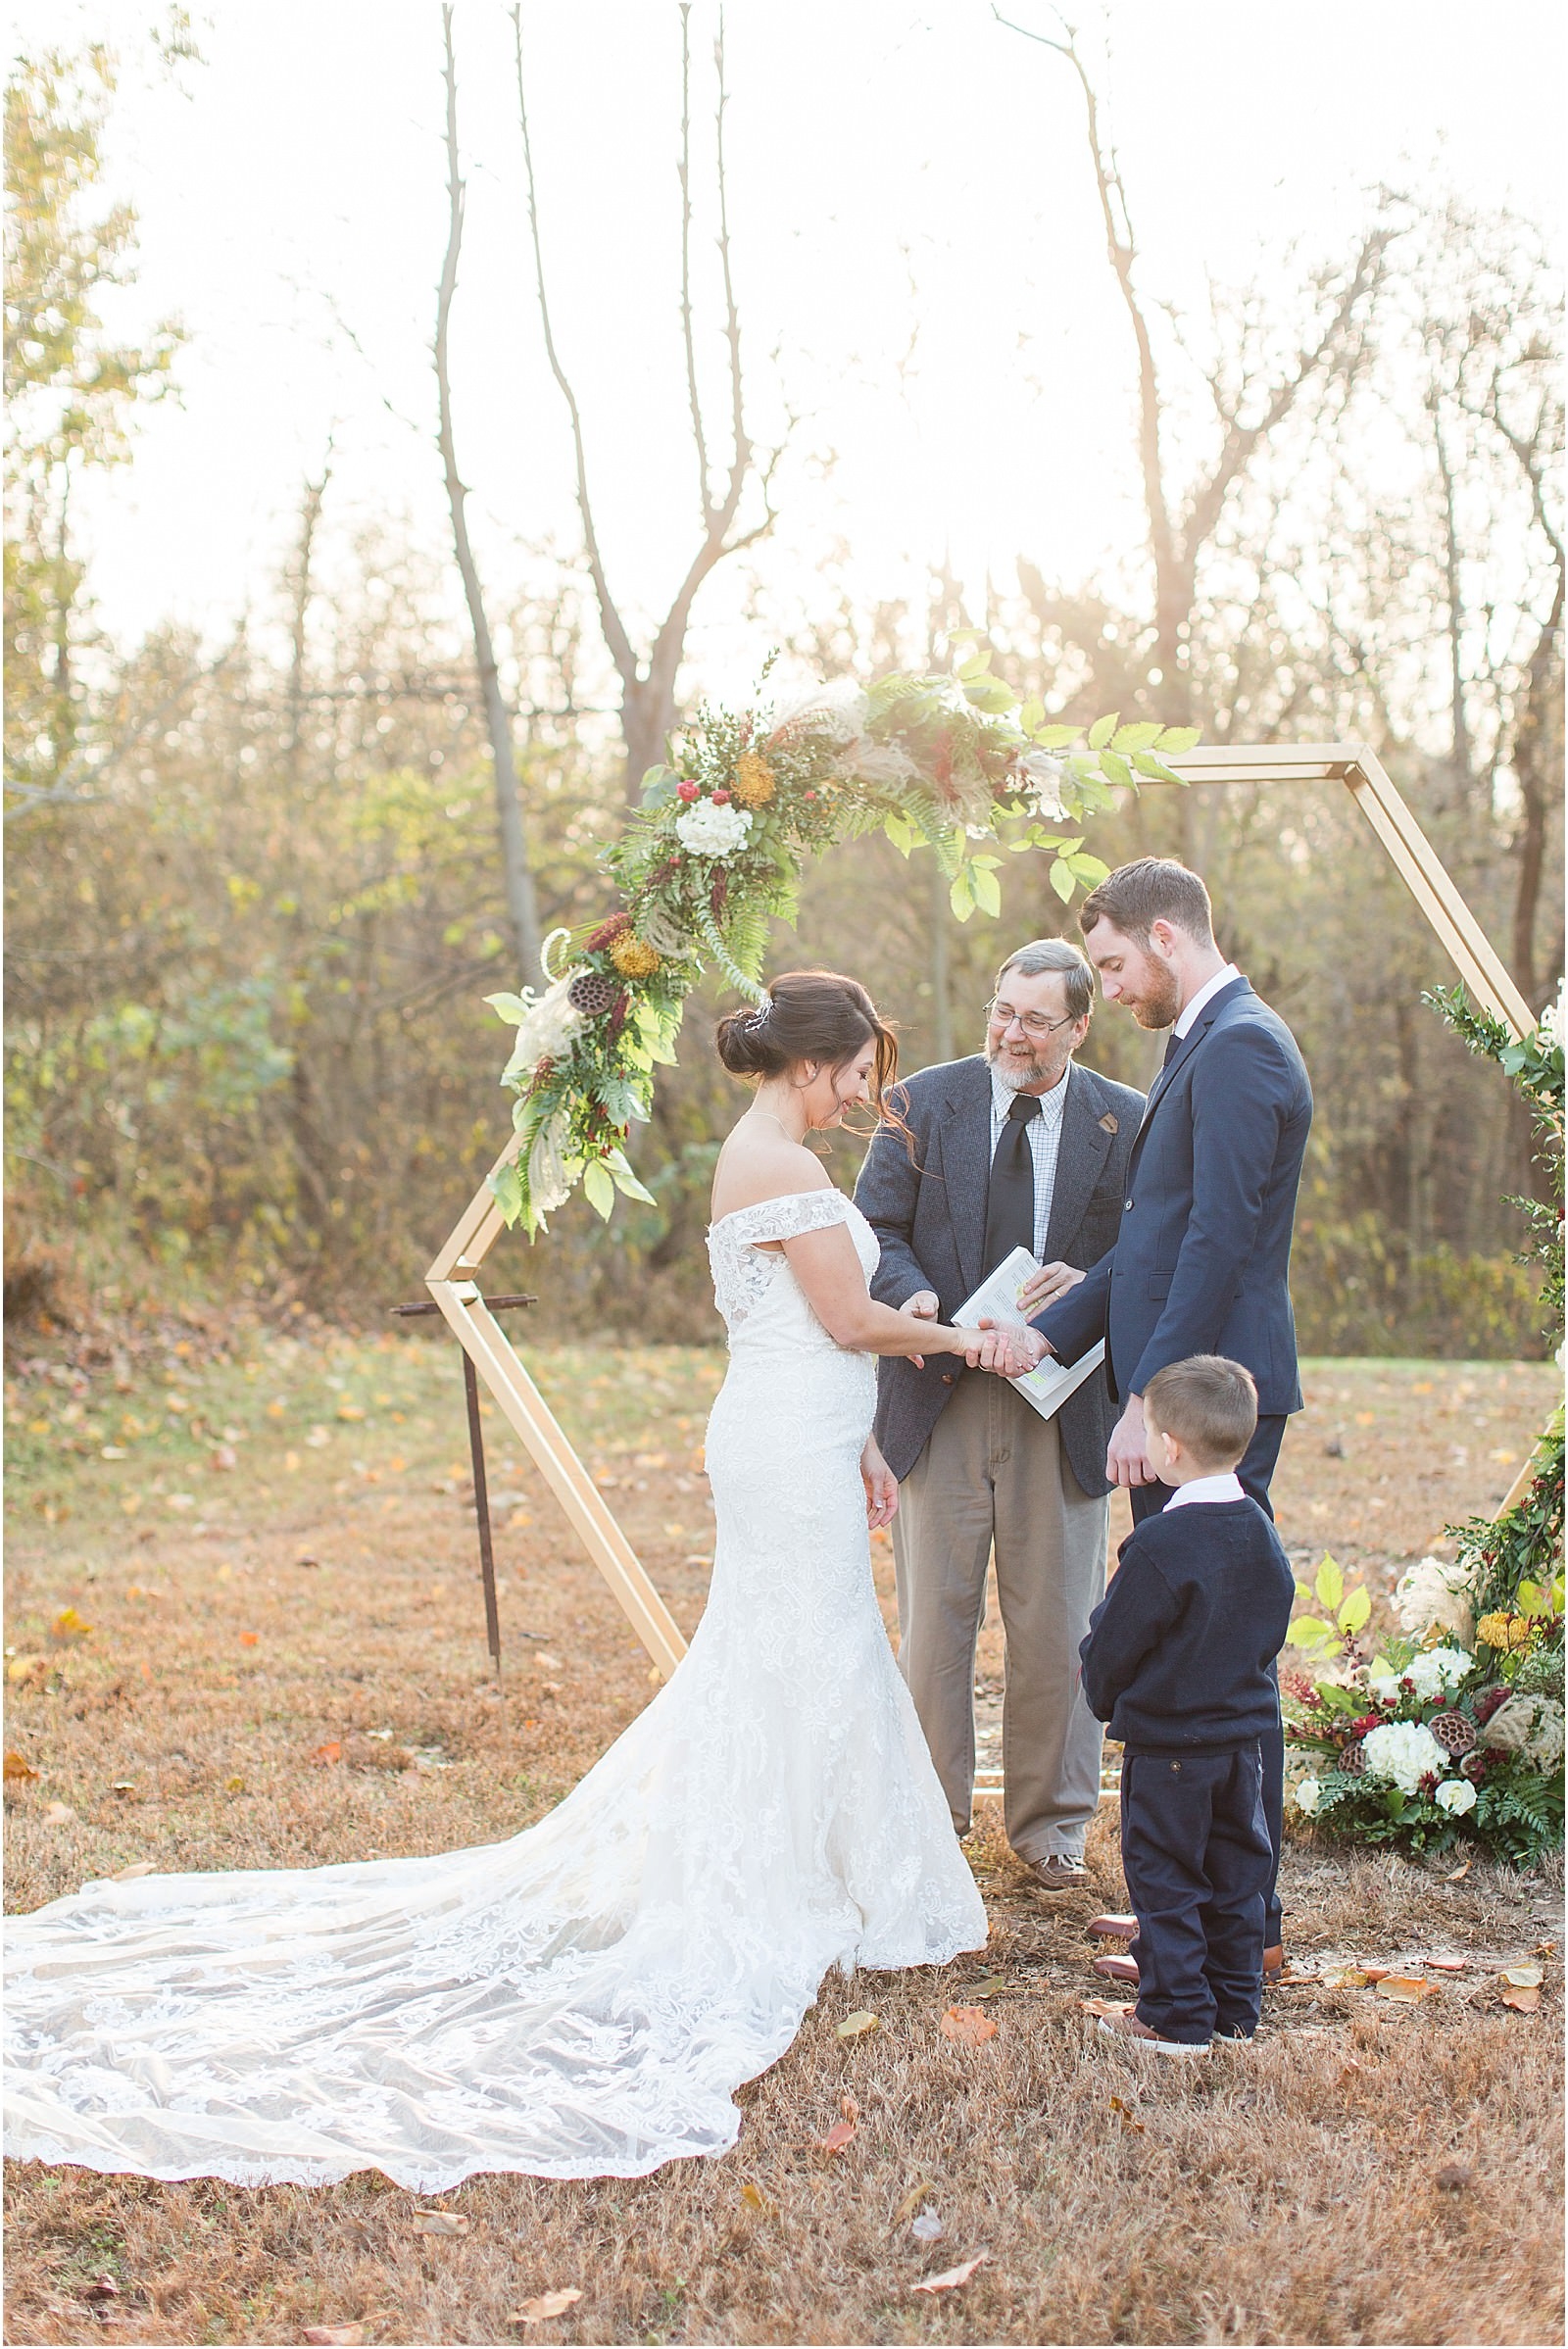 Walker and Alyssa's intimate fall wedding in Southern Indiana. | Wedding Photography | The Corner House Wedding | Southern Indiana Wedding | #fallwedding #intimatewedding | 066.jpg